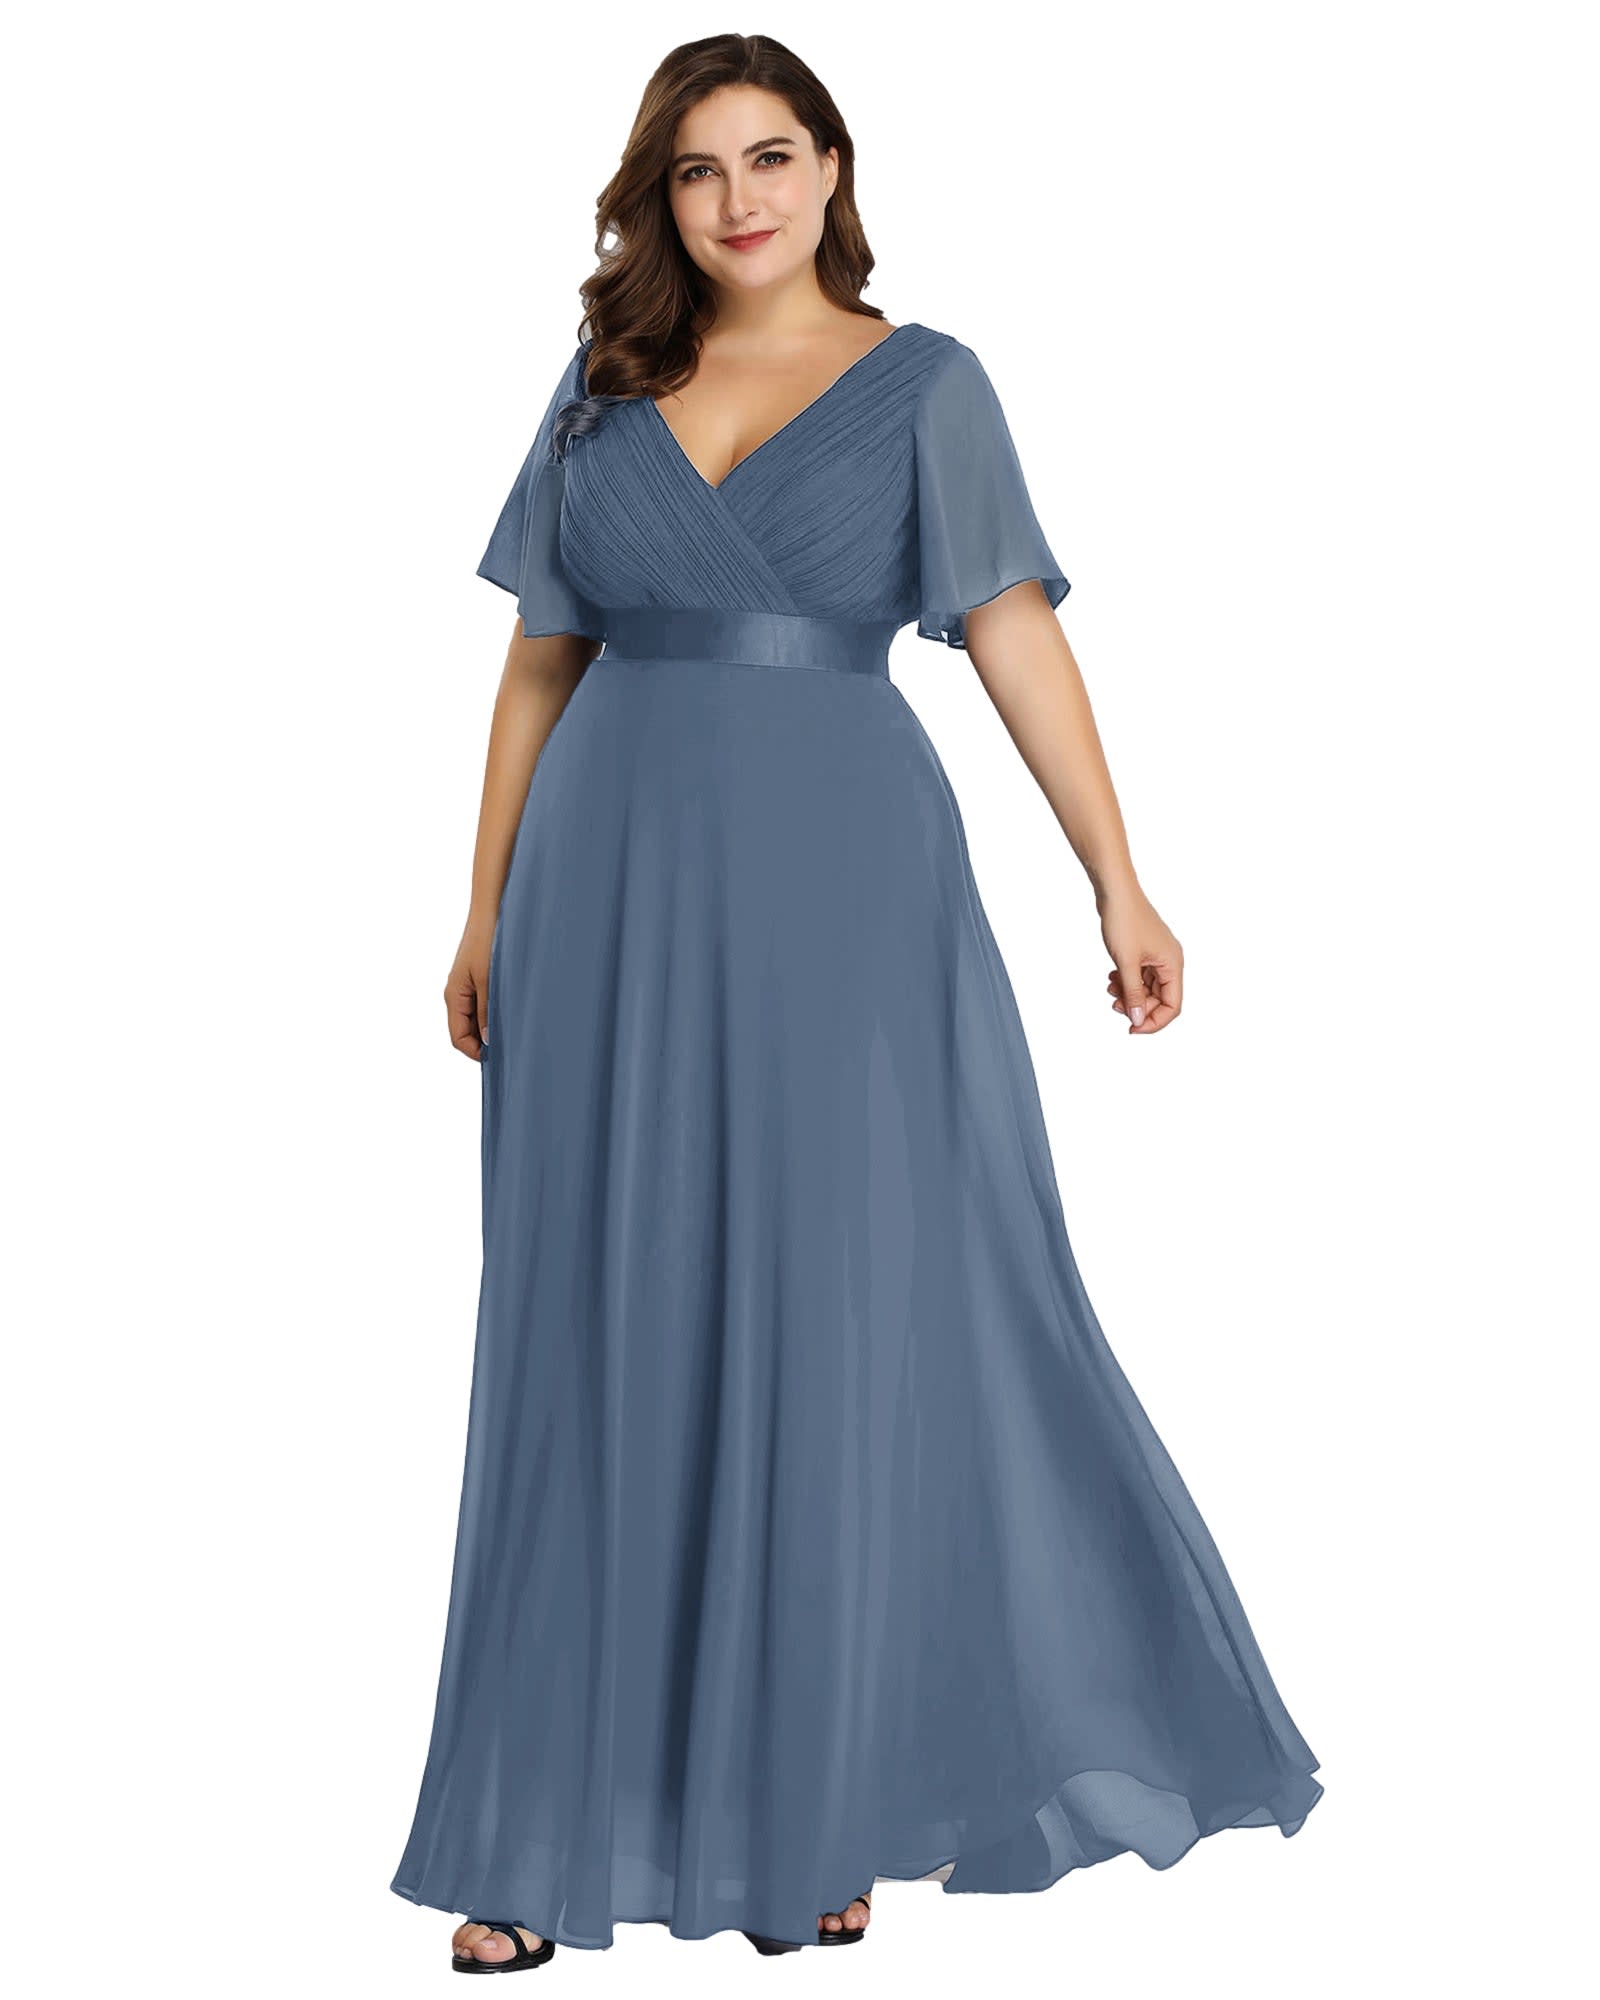 Long Chiffon Empire Waist Bridesmaid Dress with Short Flutter Sleeves | Dusty Navy